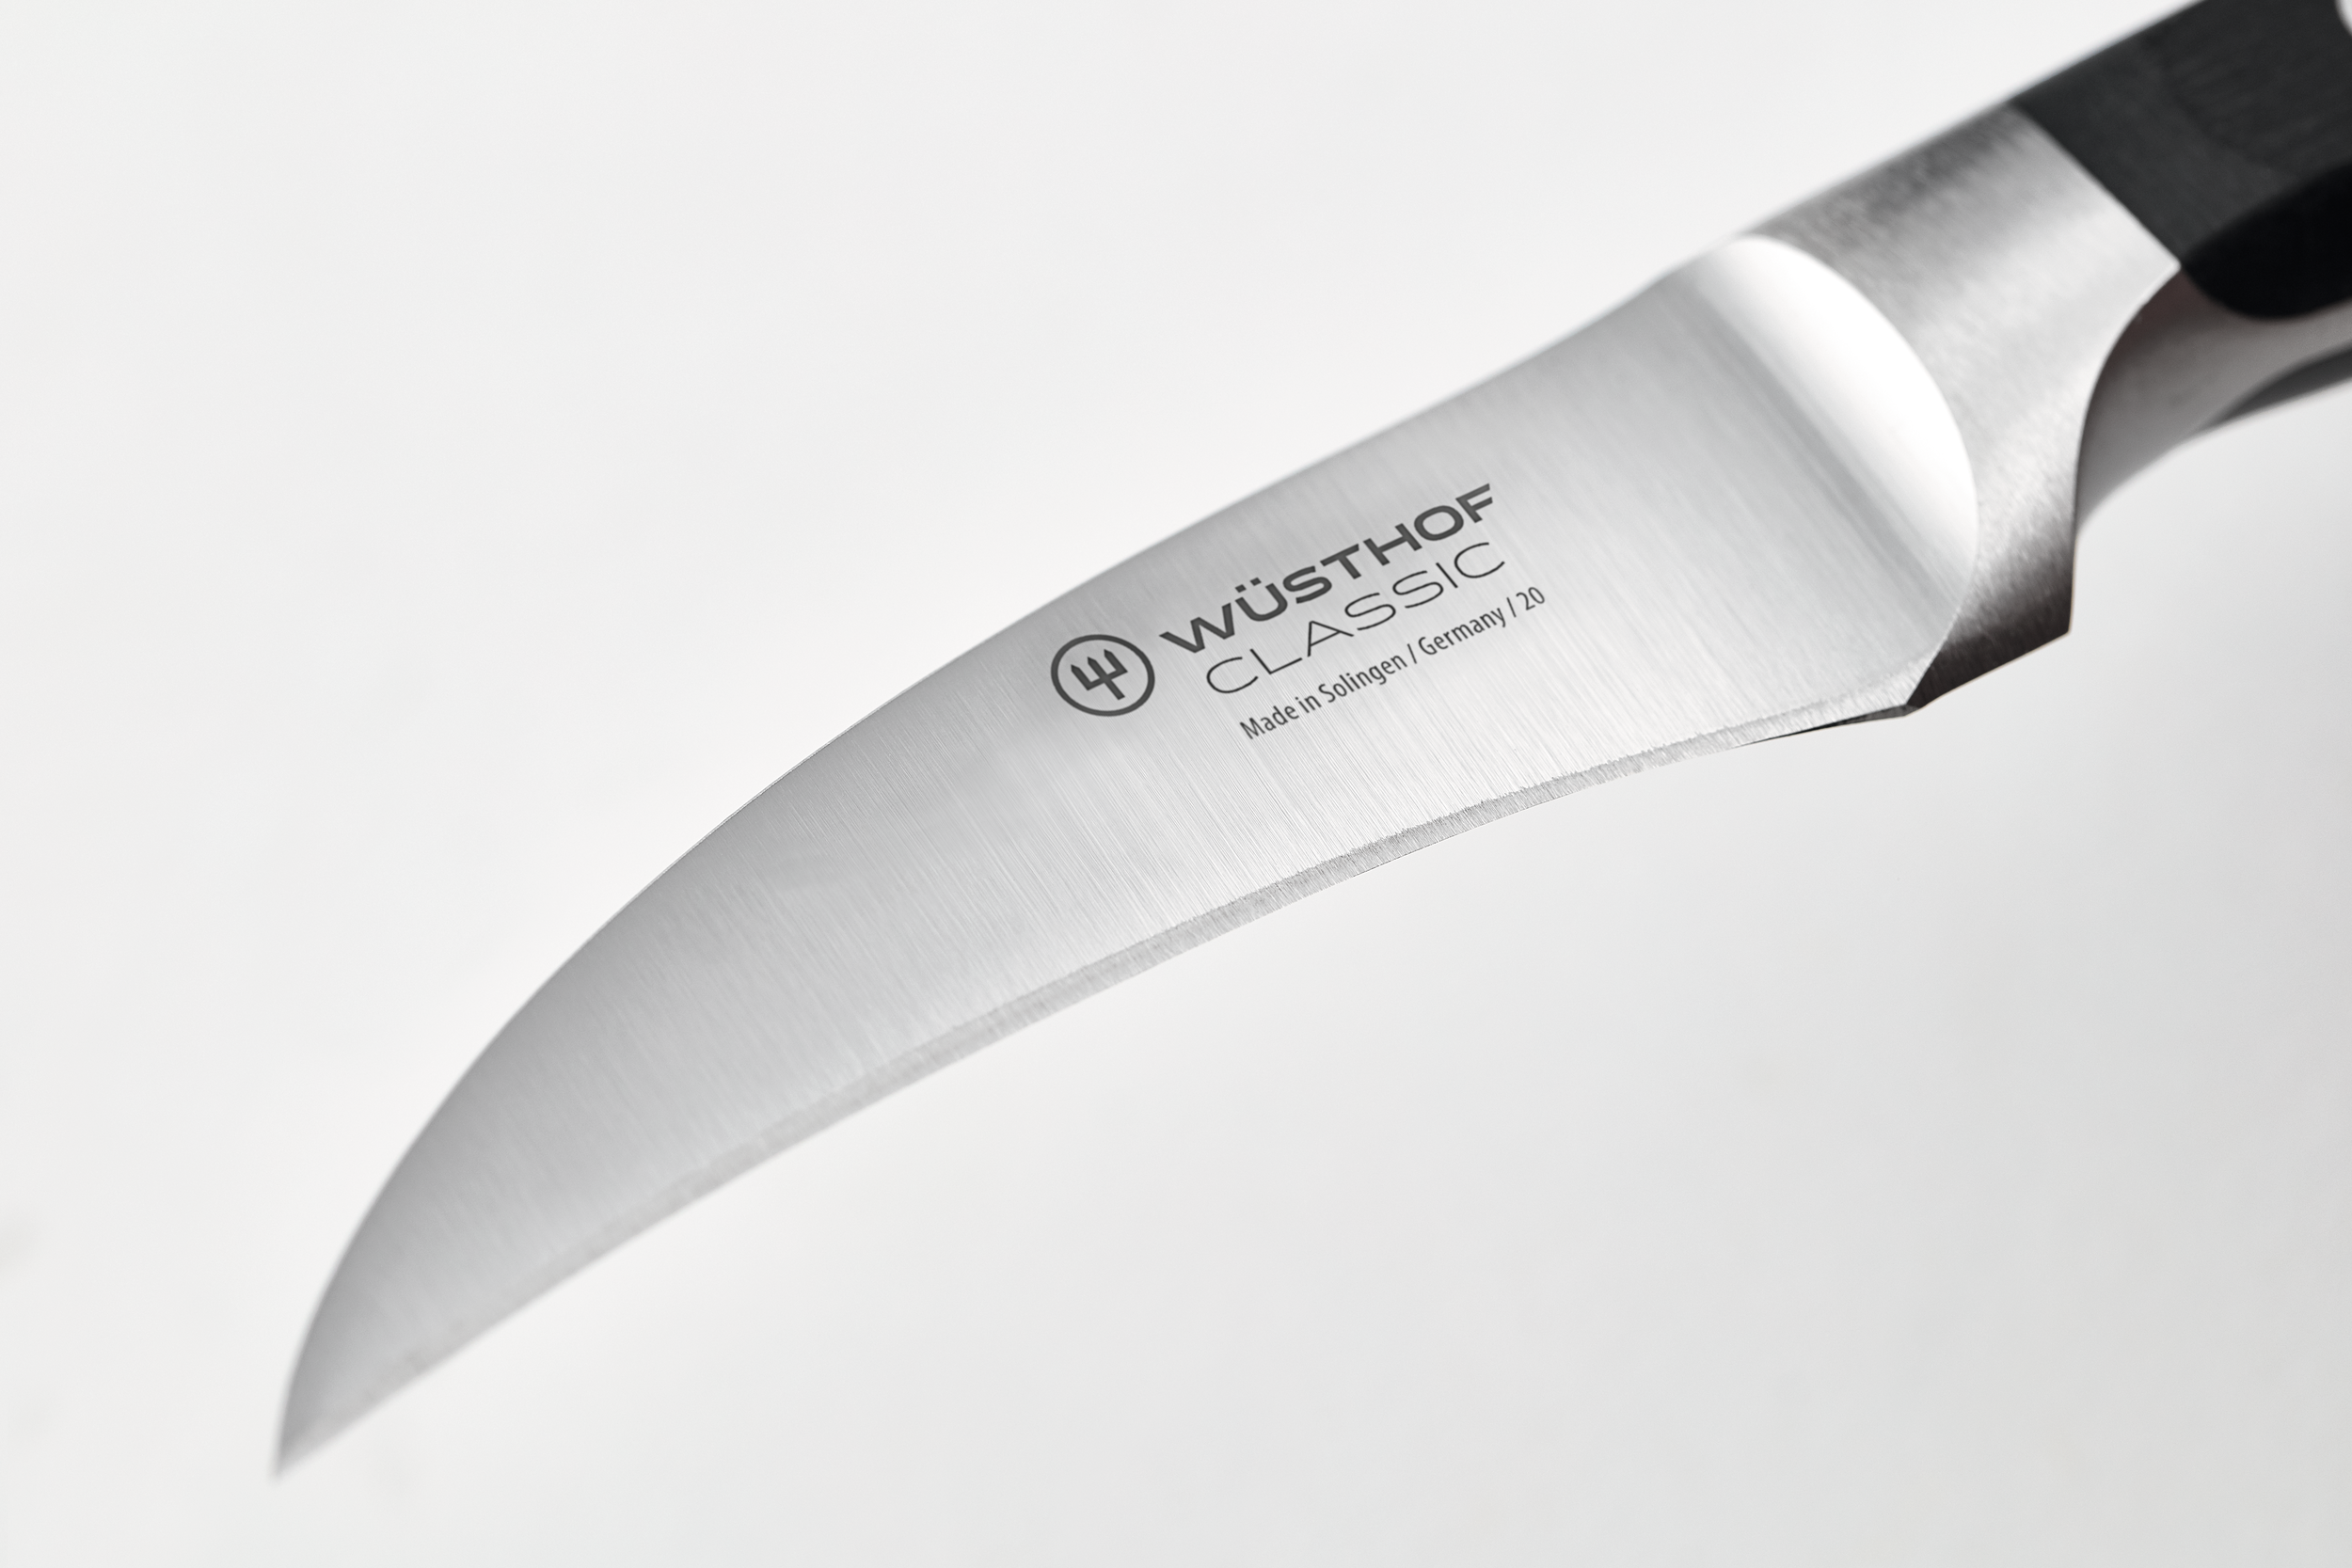 Wusthof Classic Peeling knife 7cm 1040102207